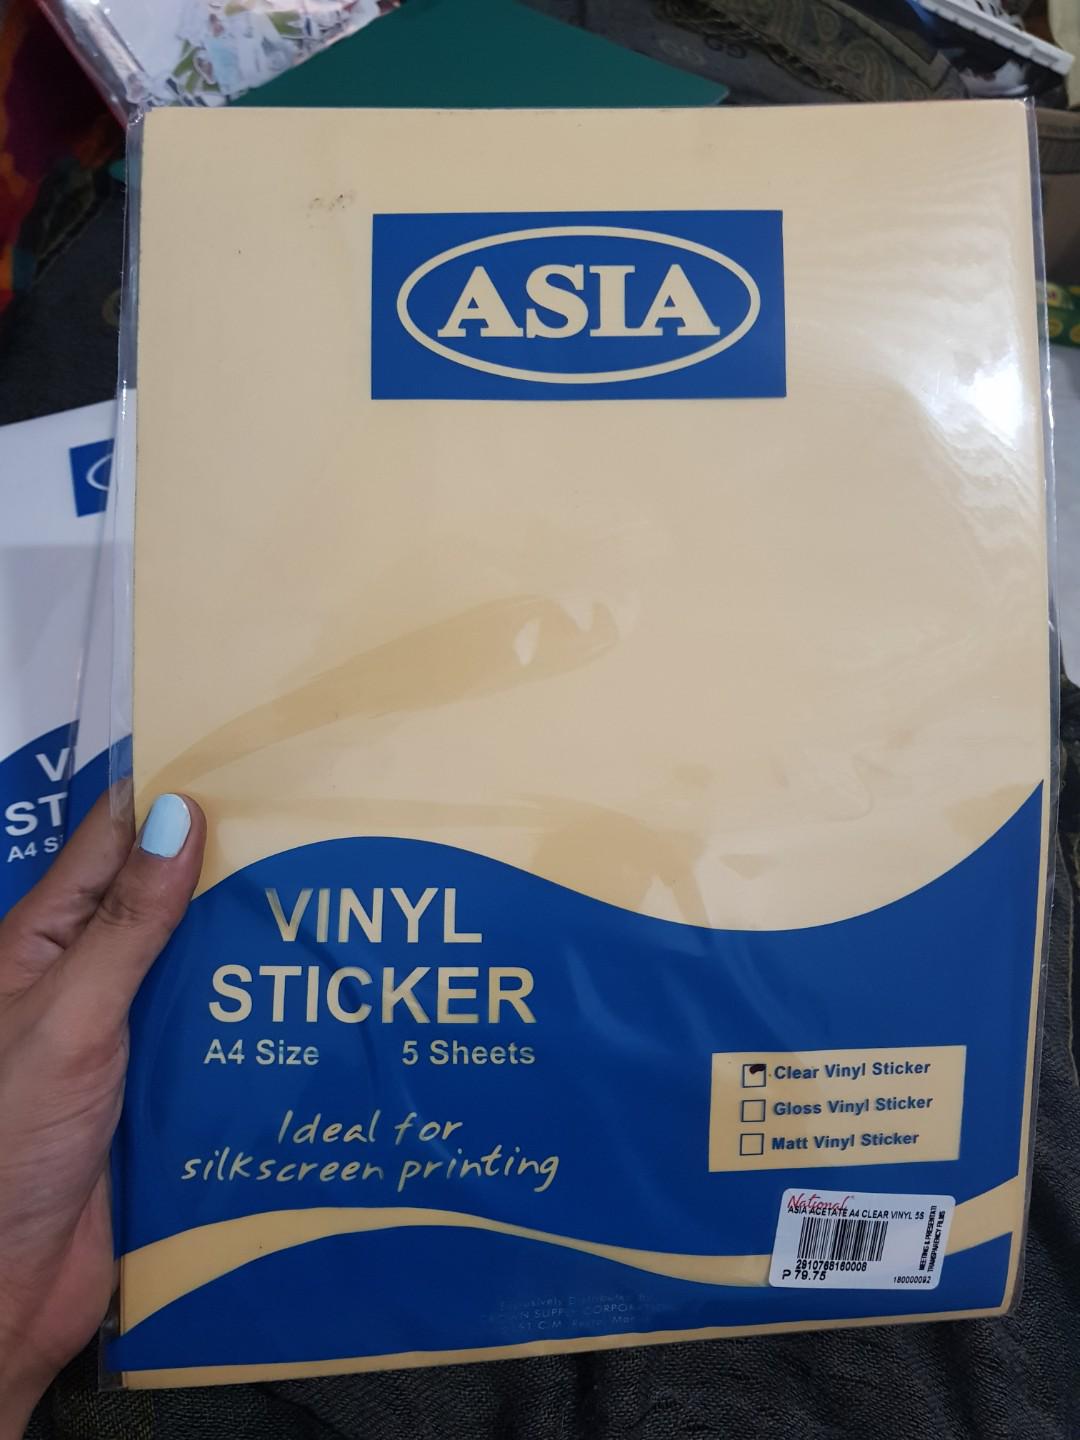 Asia Vinyl Sticker Paper